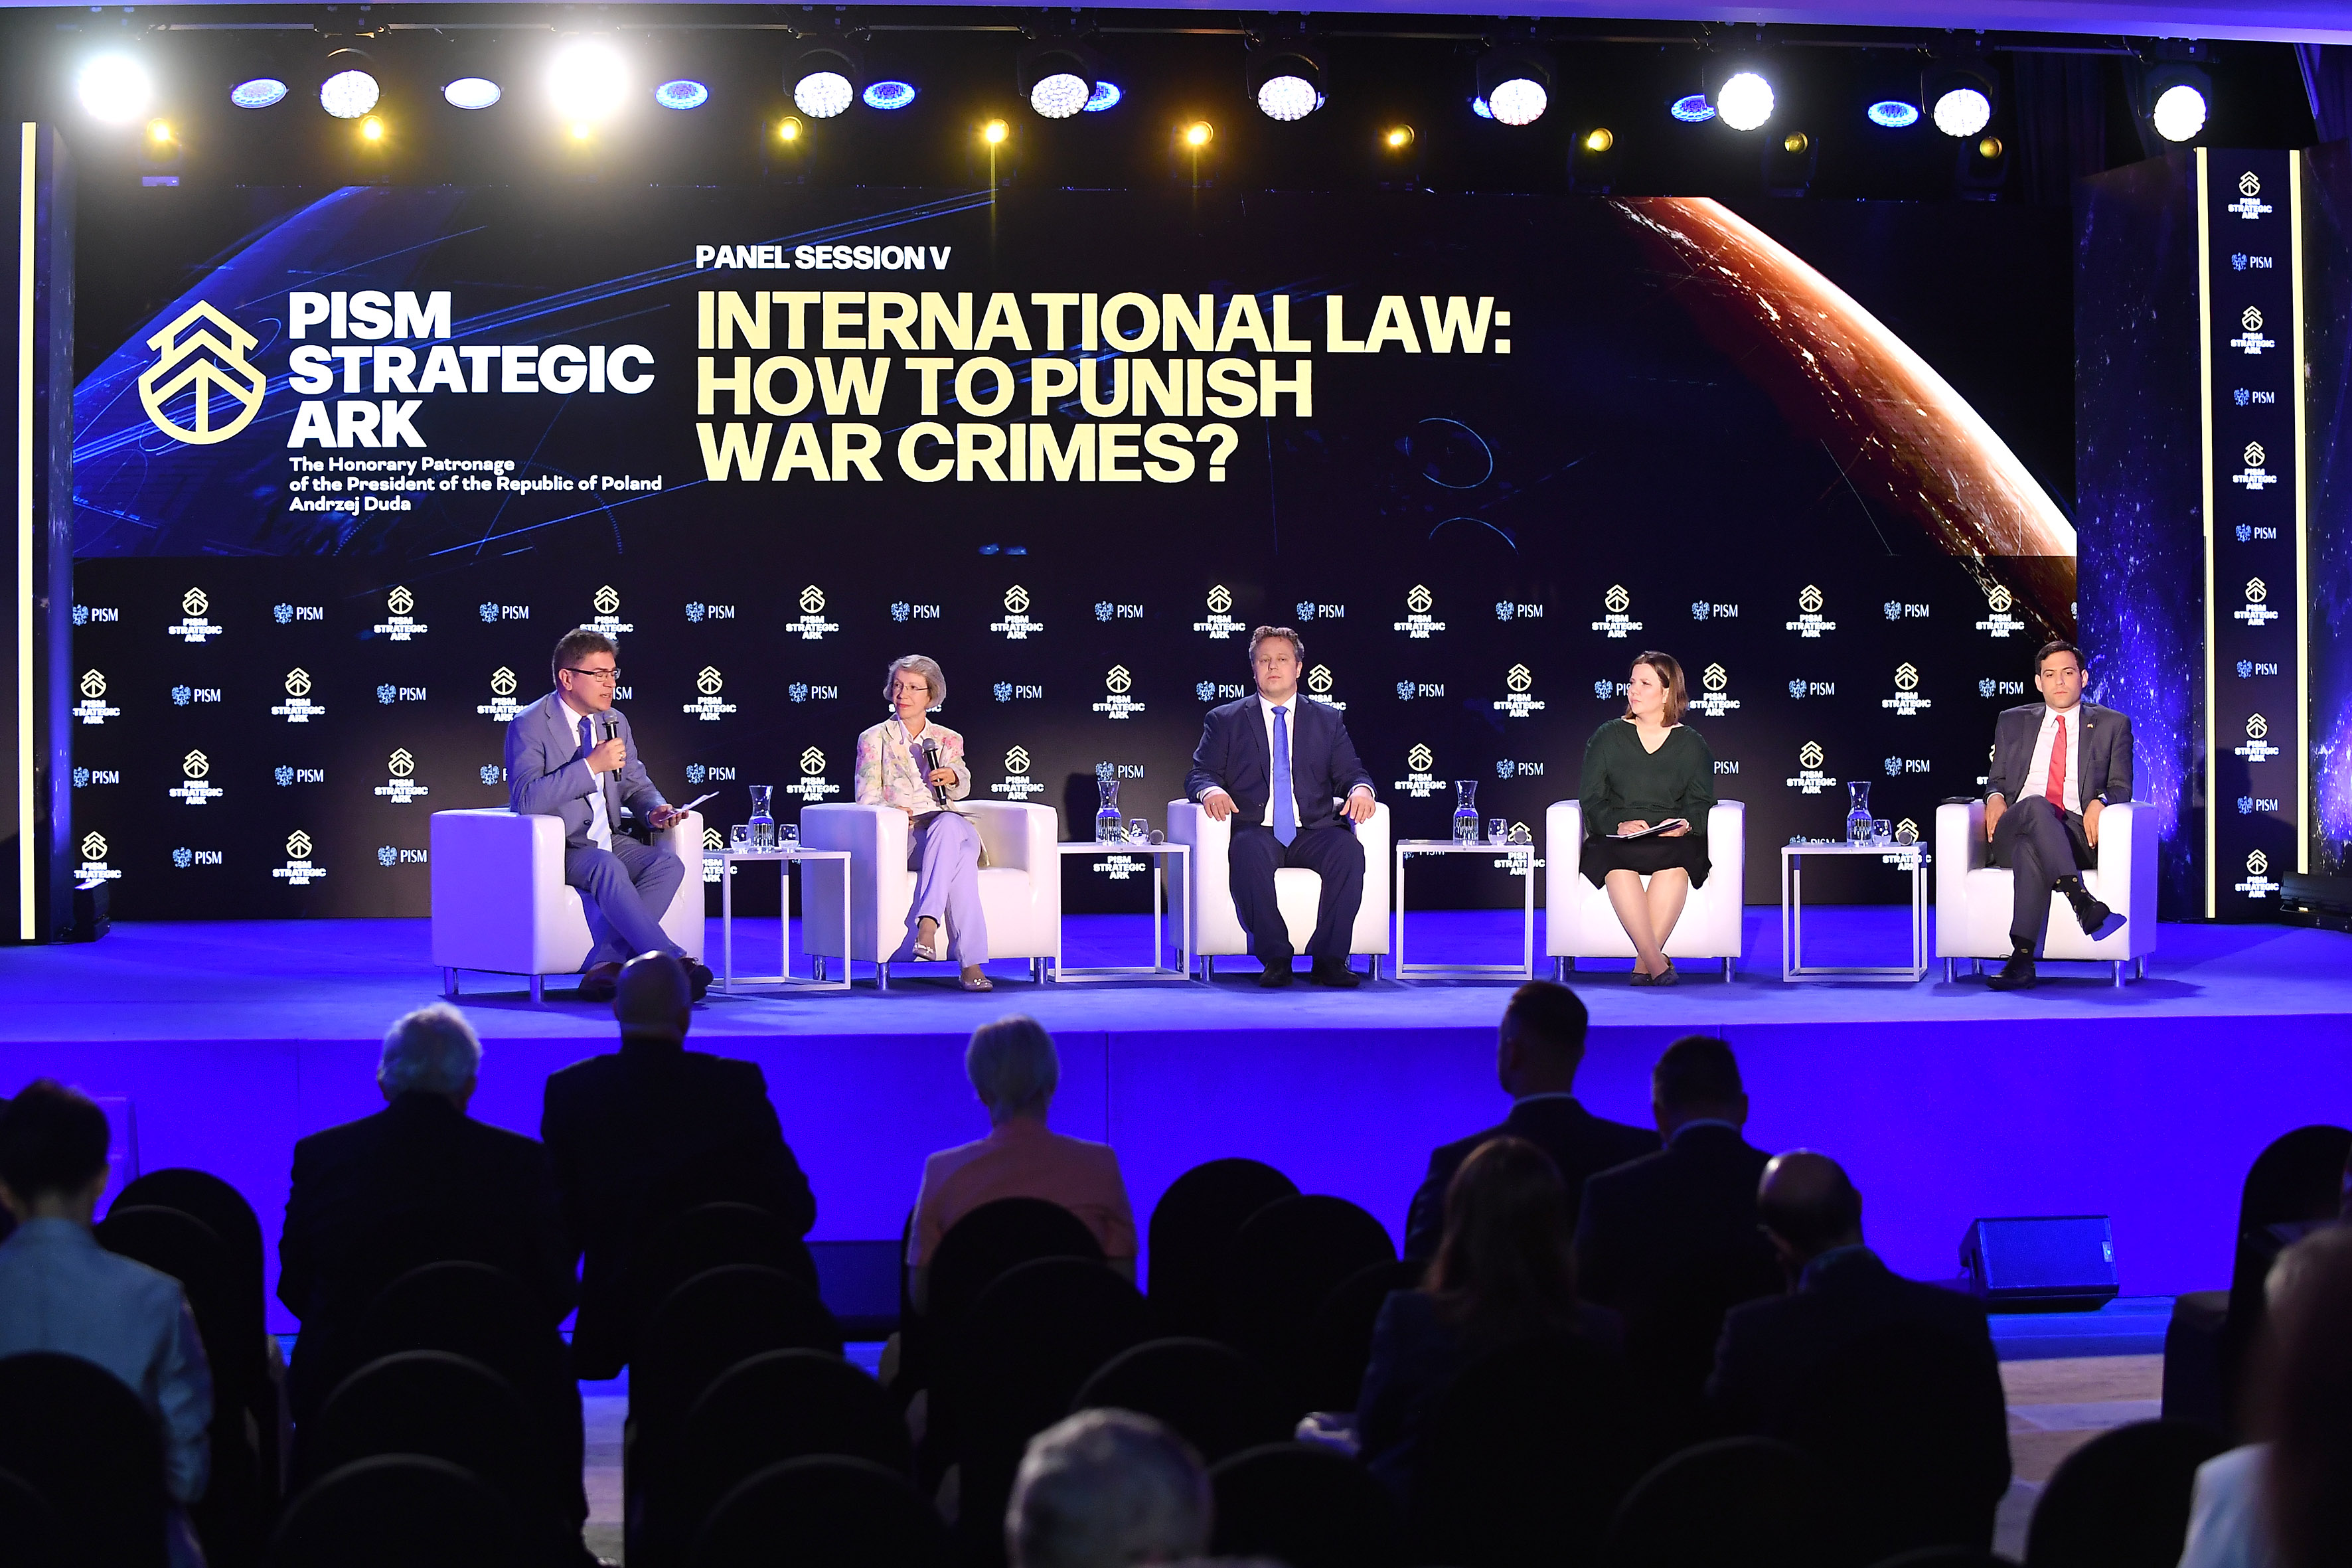 Panel Session V - International Law: How to Punish War Crimes?